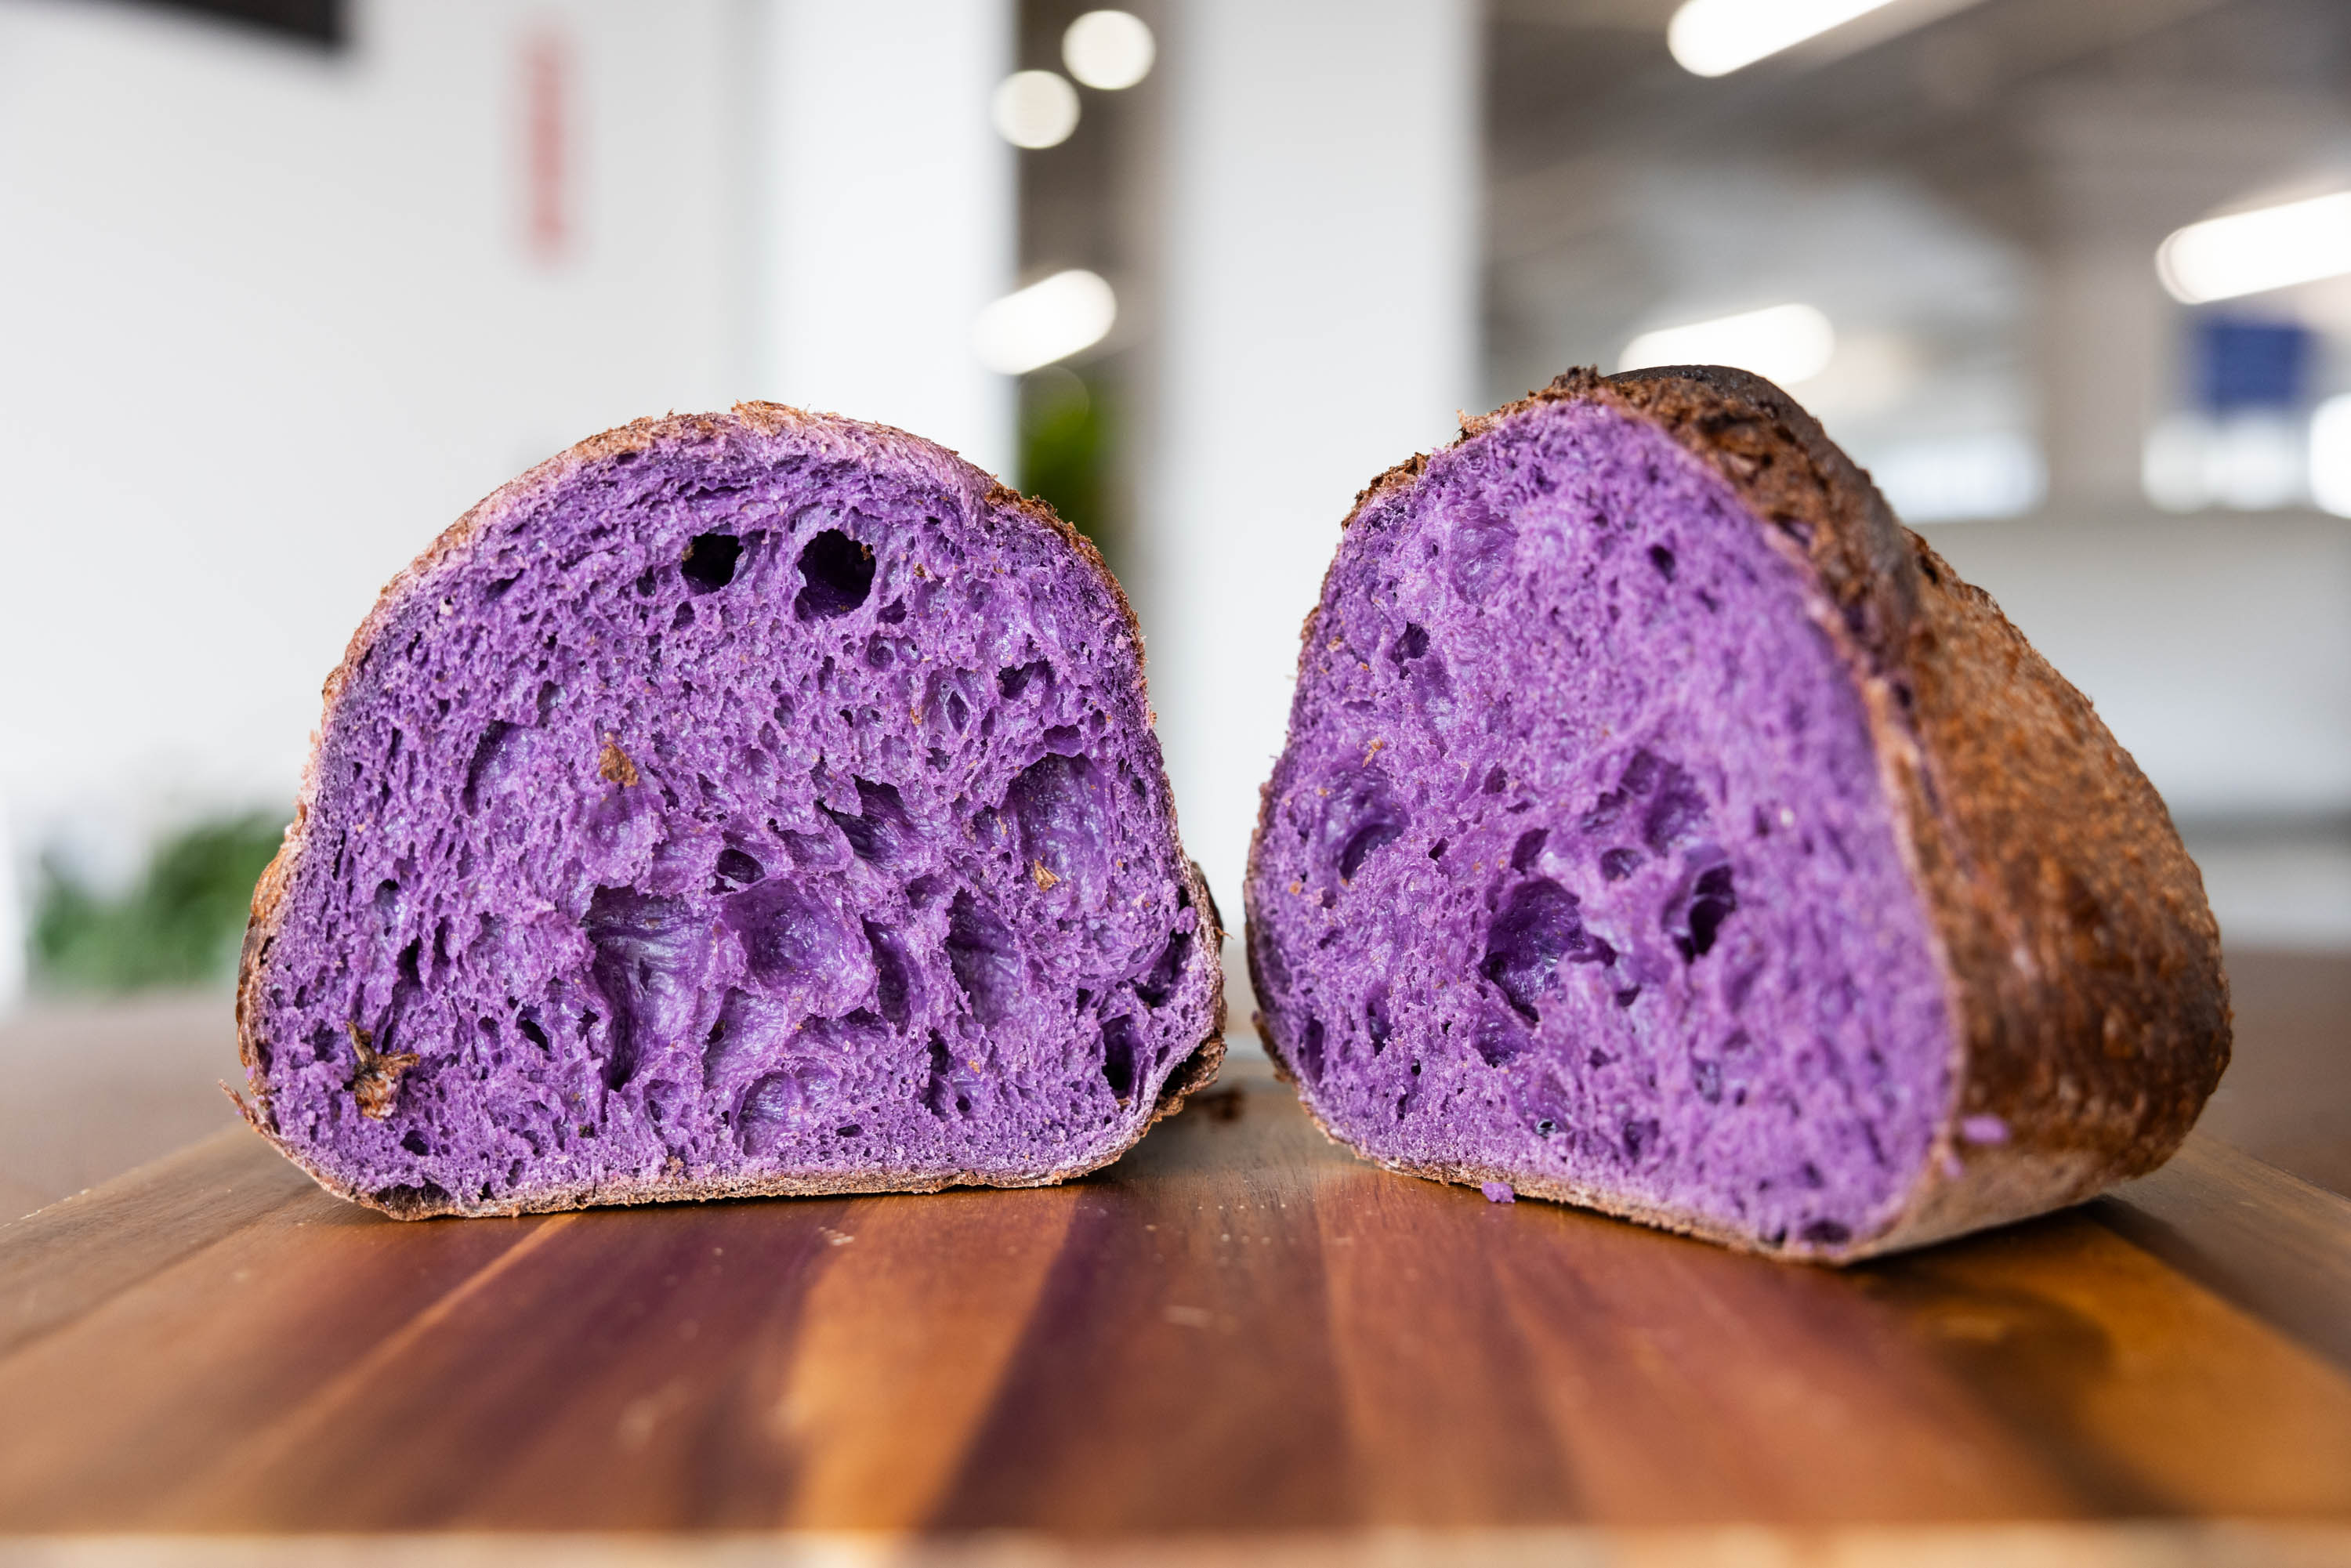 A loaf of bread sliced half has purple insides.